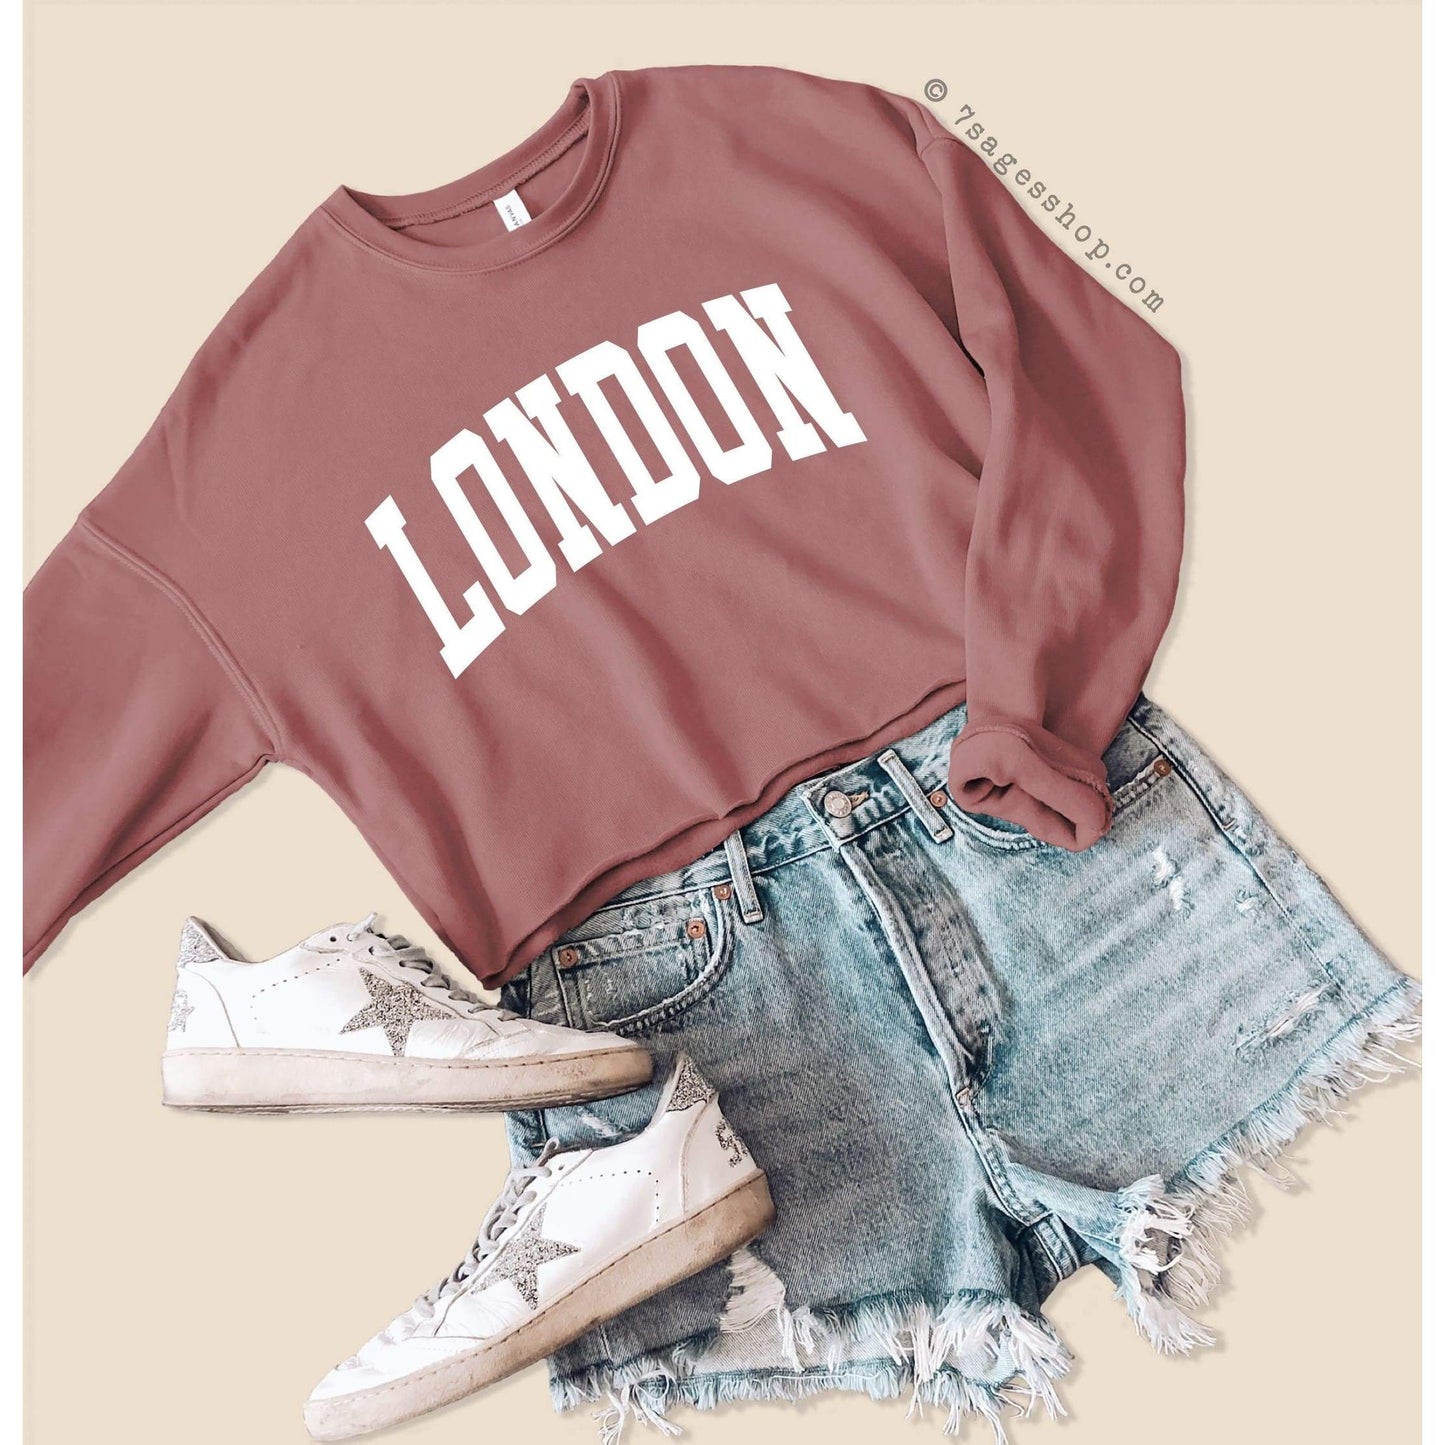 London Cropped Sweatshirt - London Sweatshirt - England Shirt - London Crop Top - Fleece Crewneck Sweater